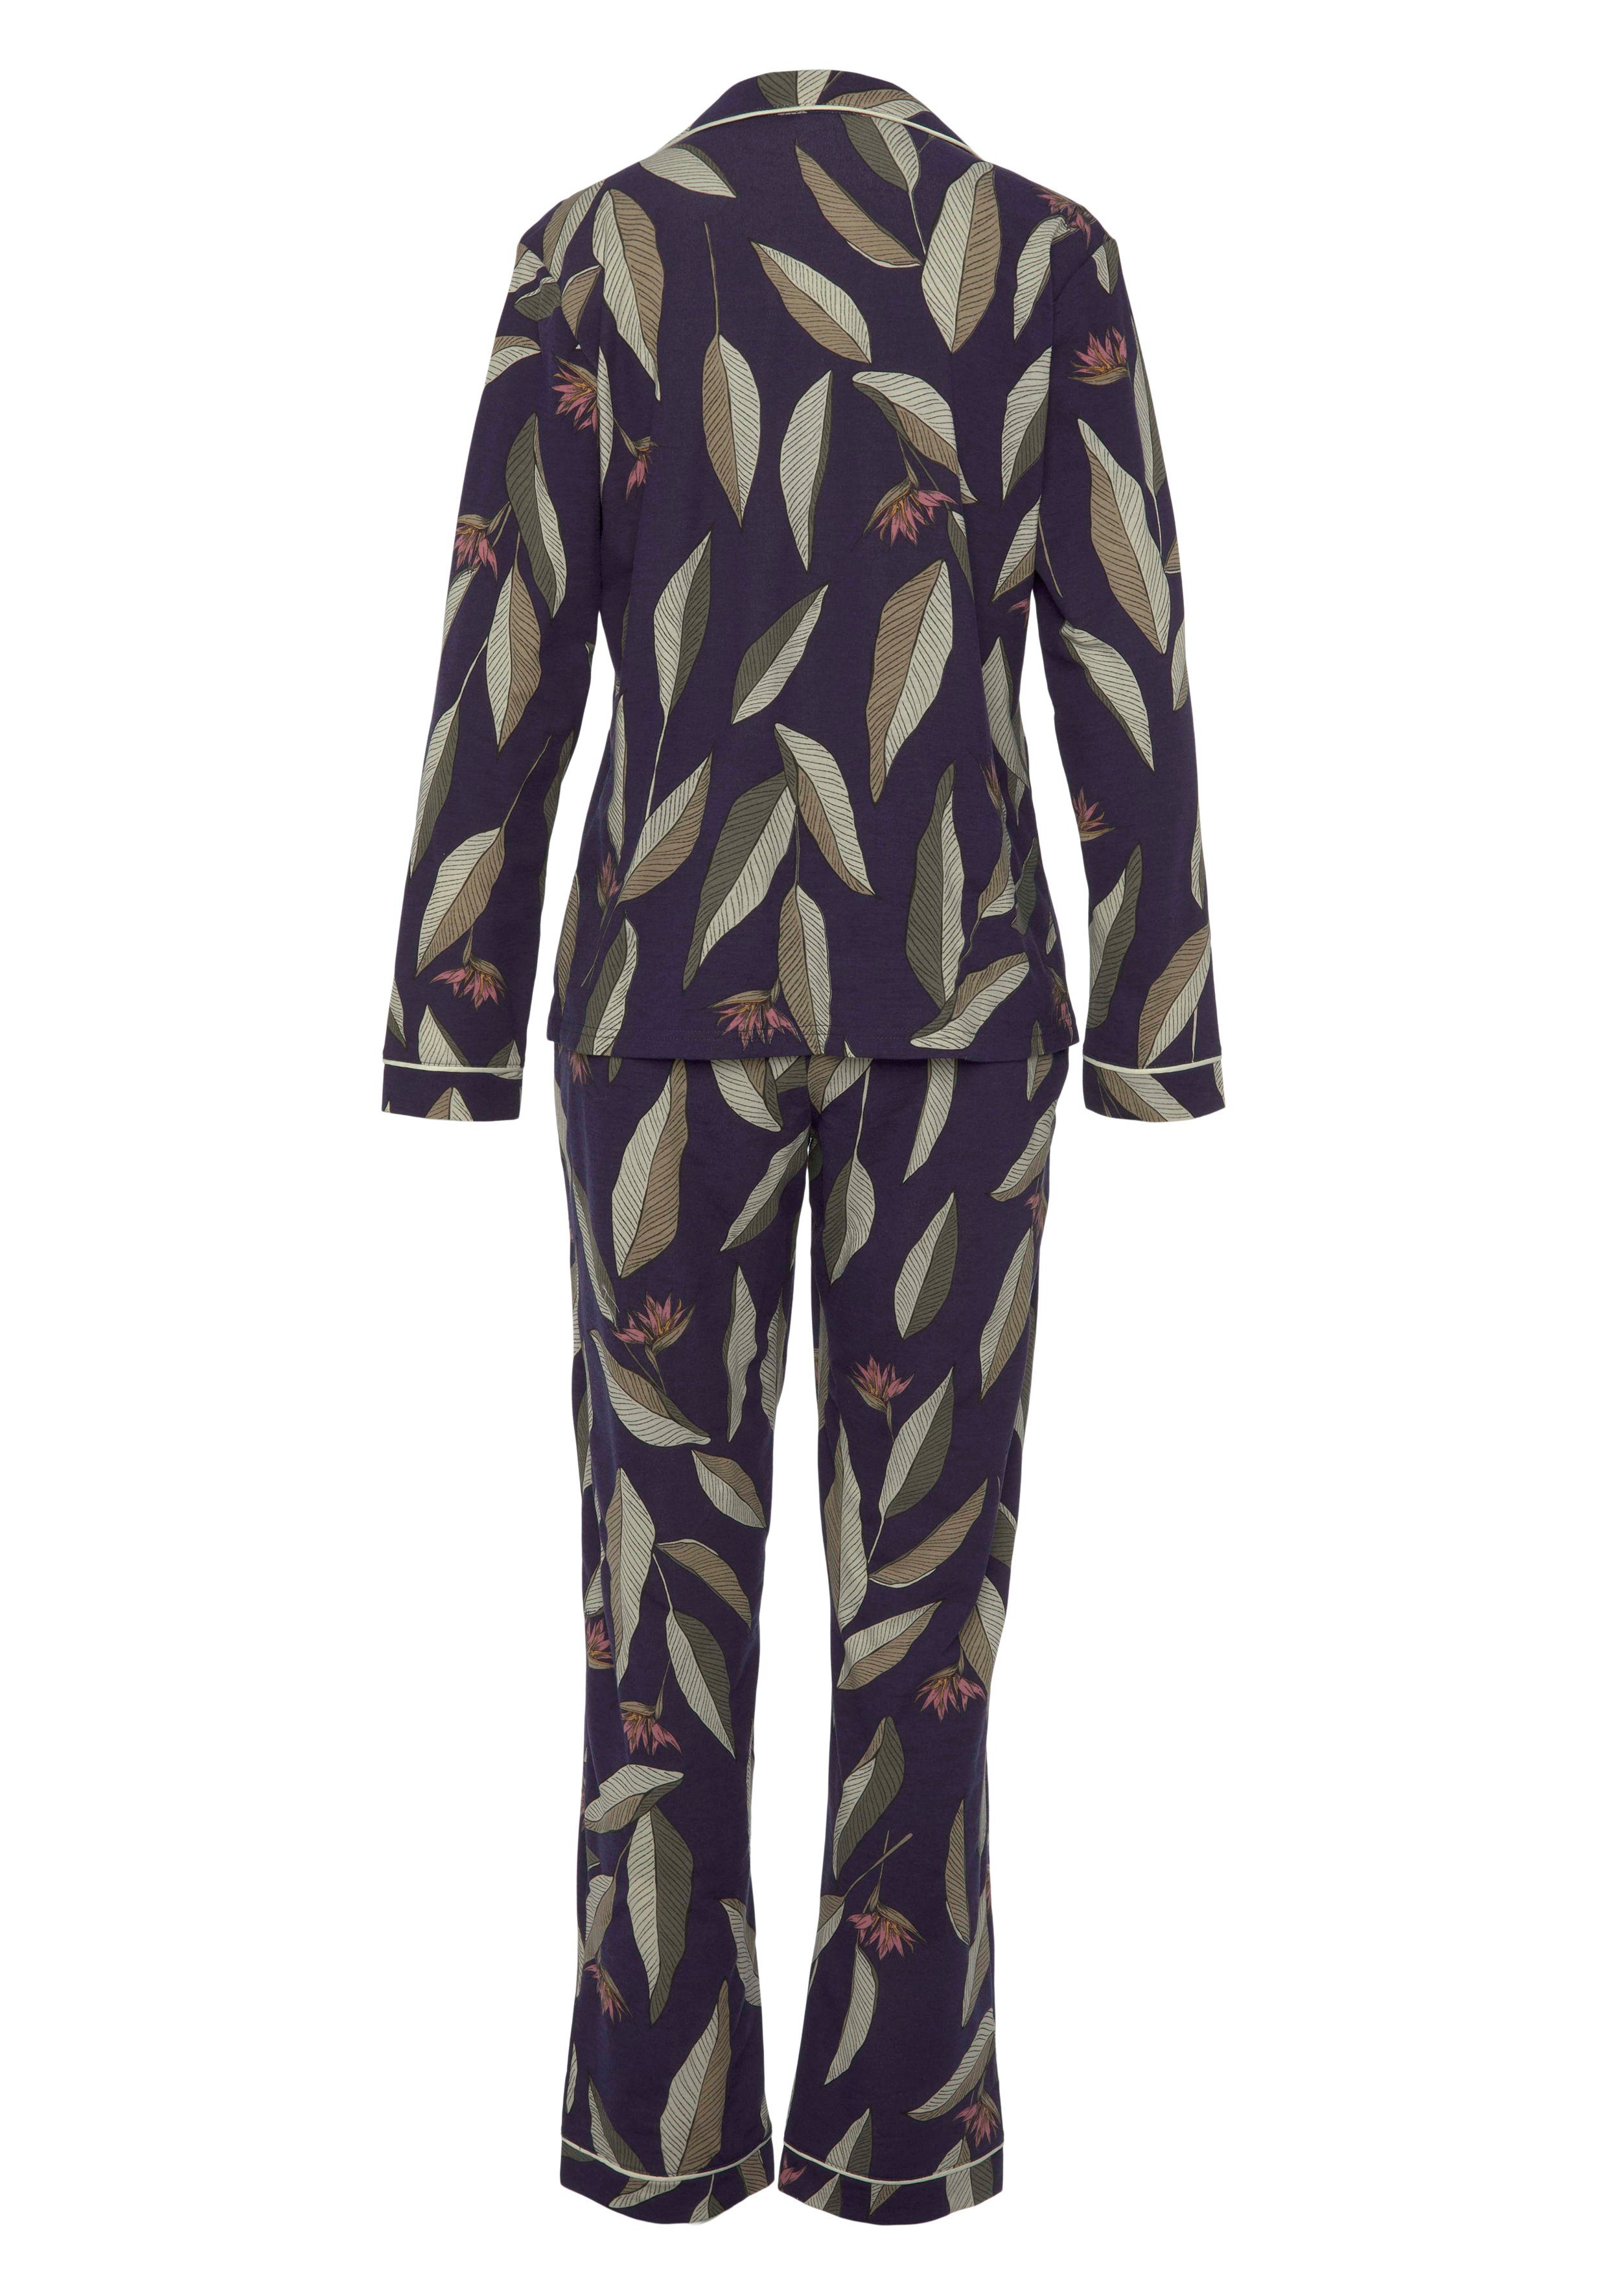 (2 LASCANA tlg) Pyjama klassischen im dunkellila-gemustert Schnitt